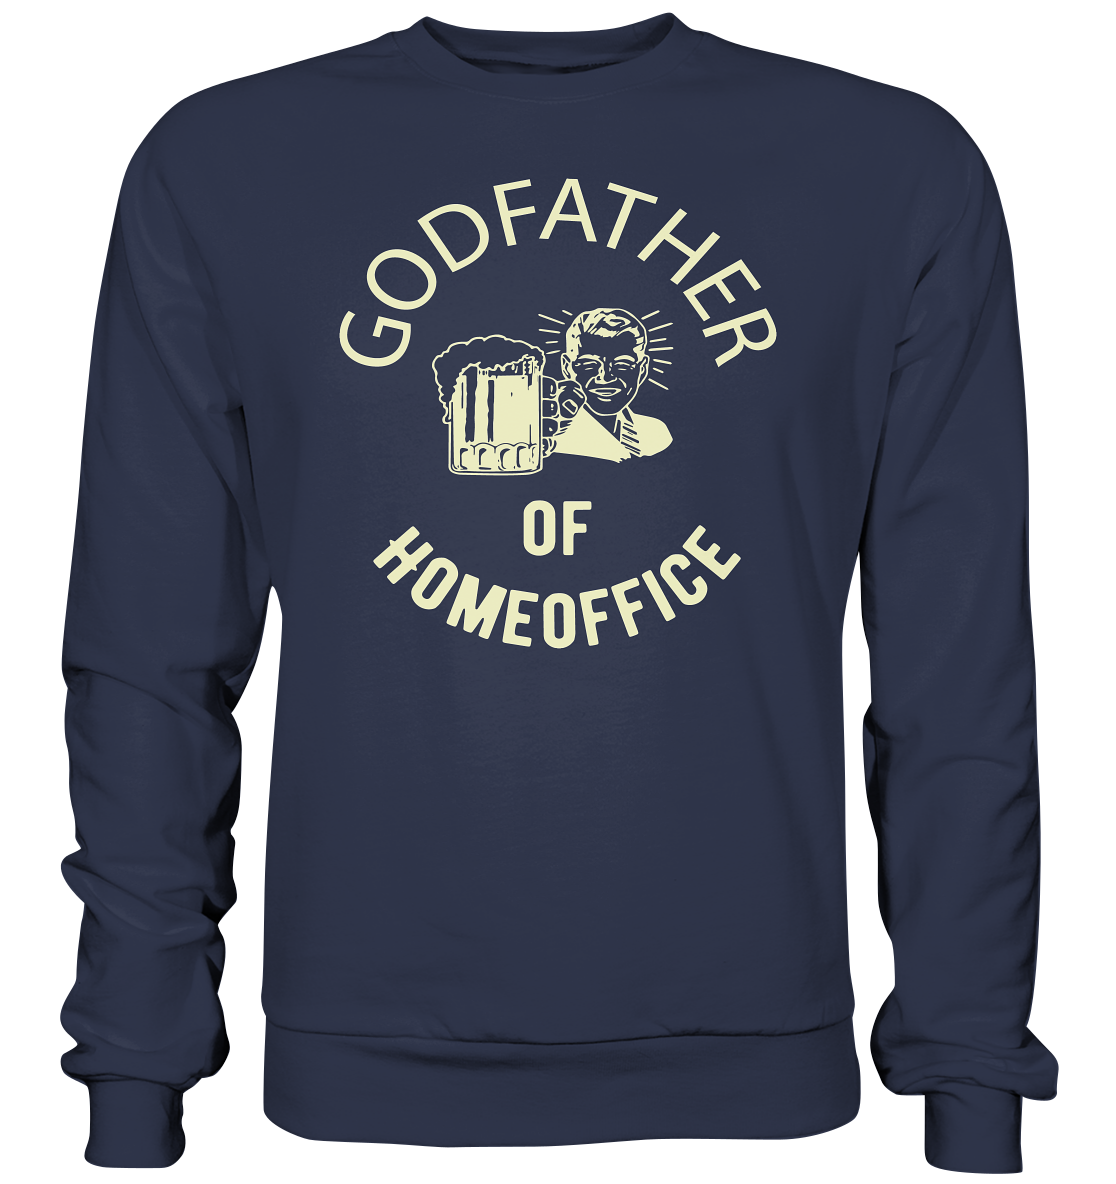 Godfather of Homeoffice - Premium Sweatshirt